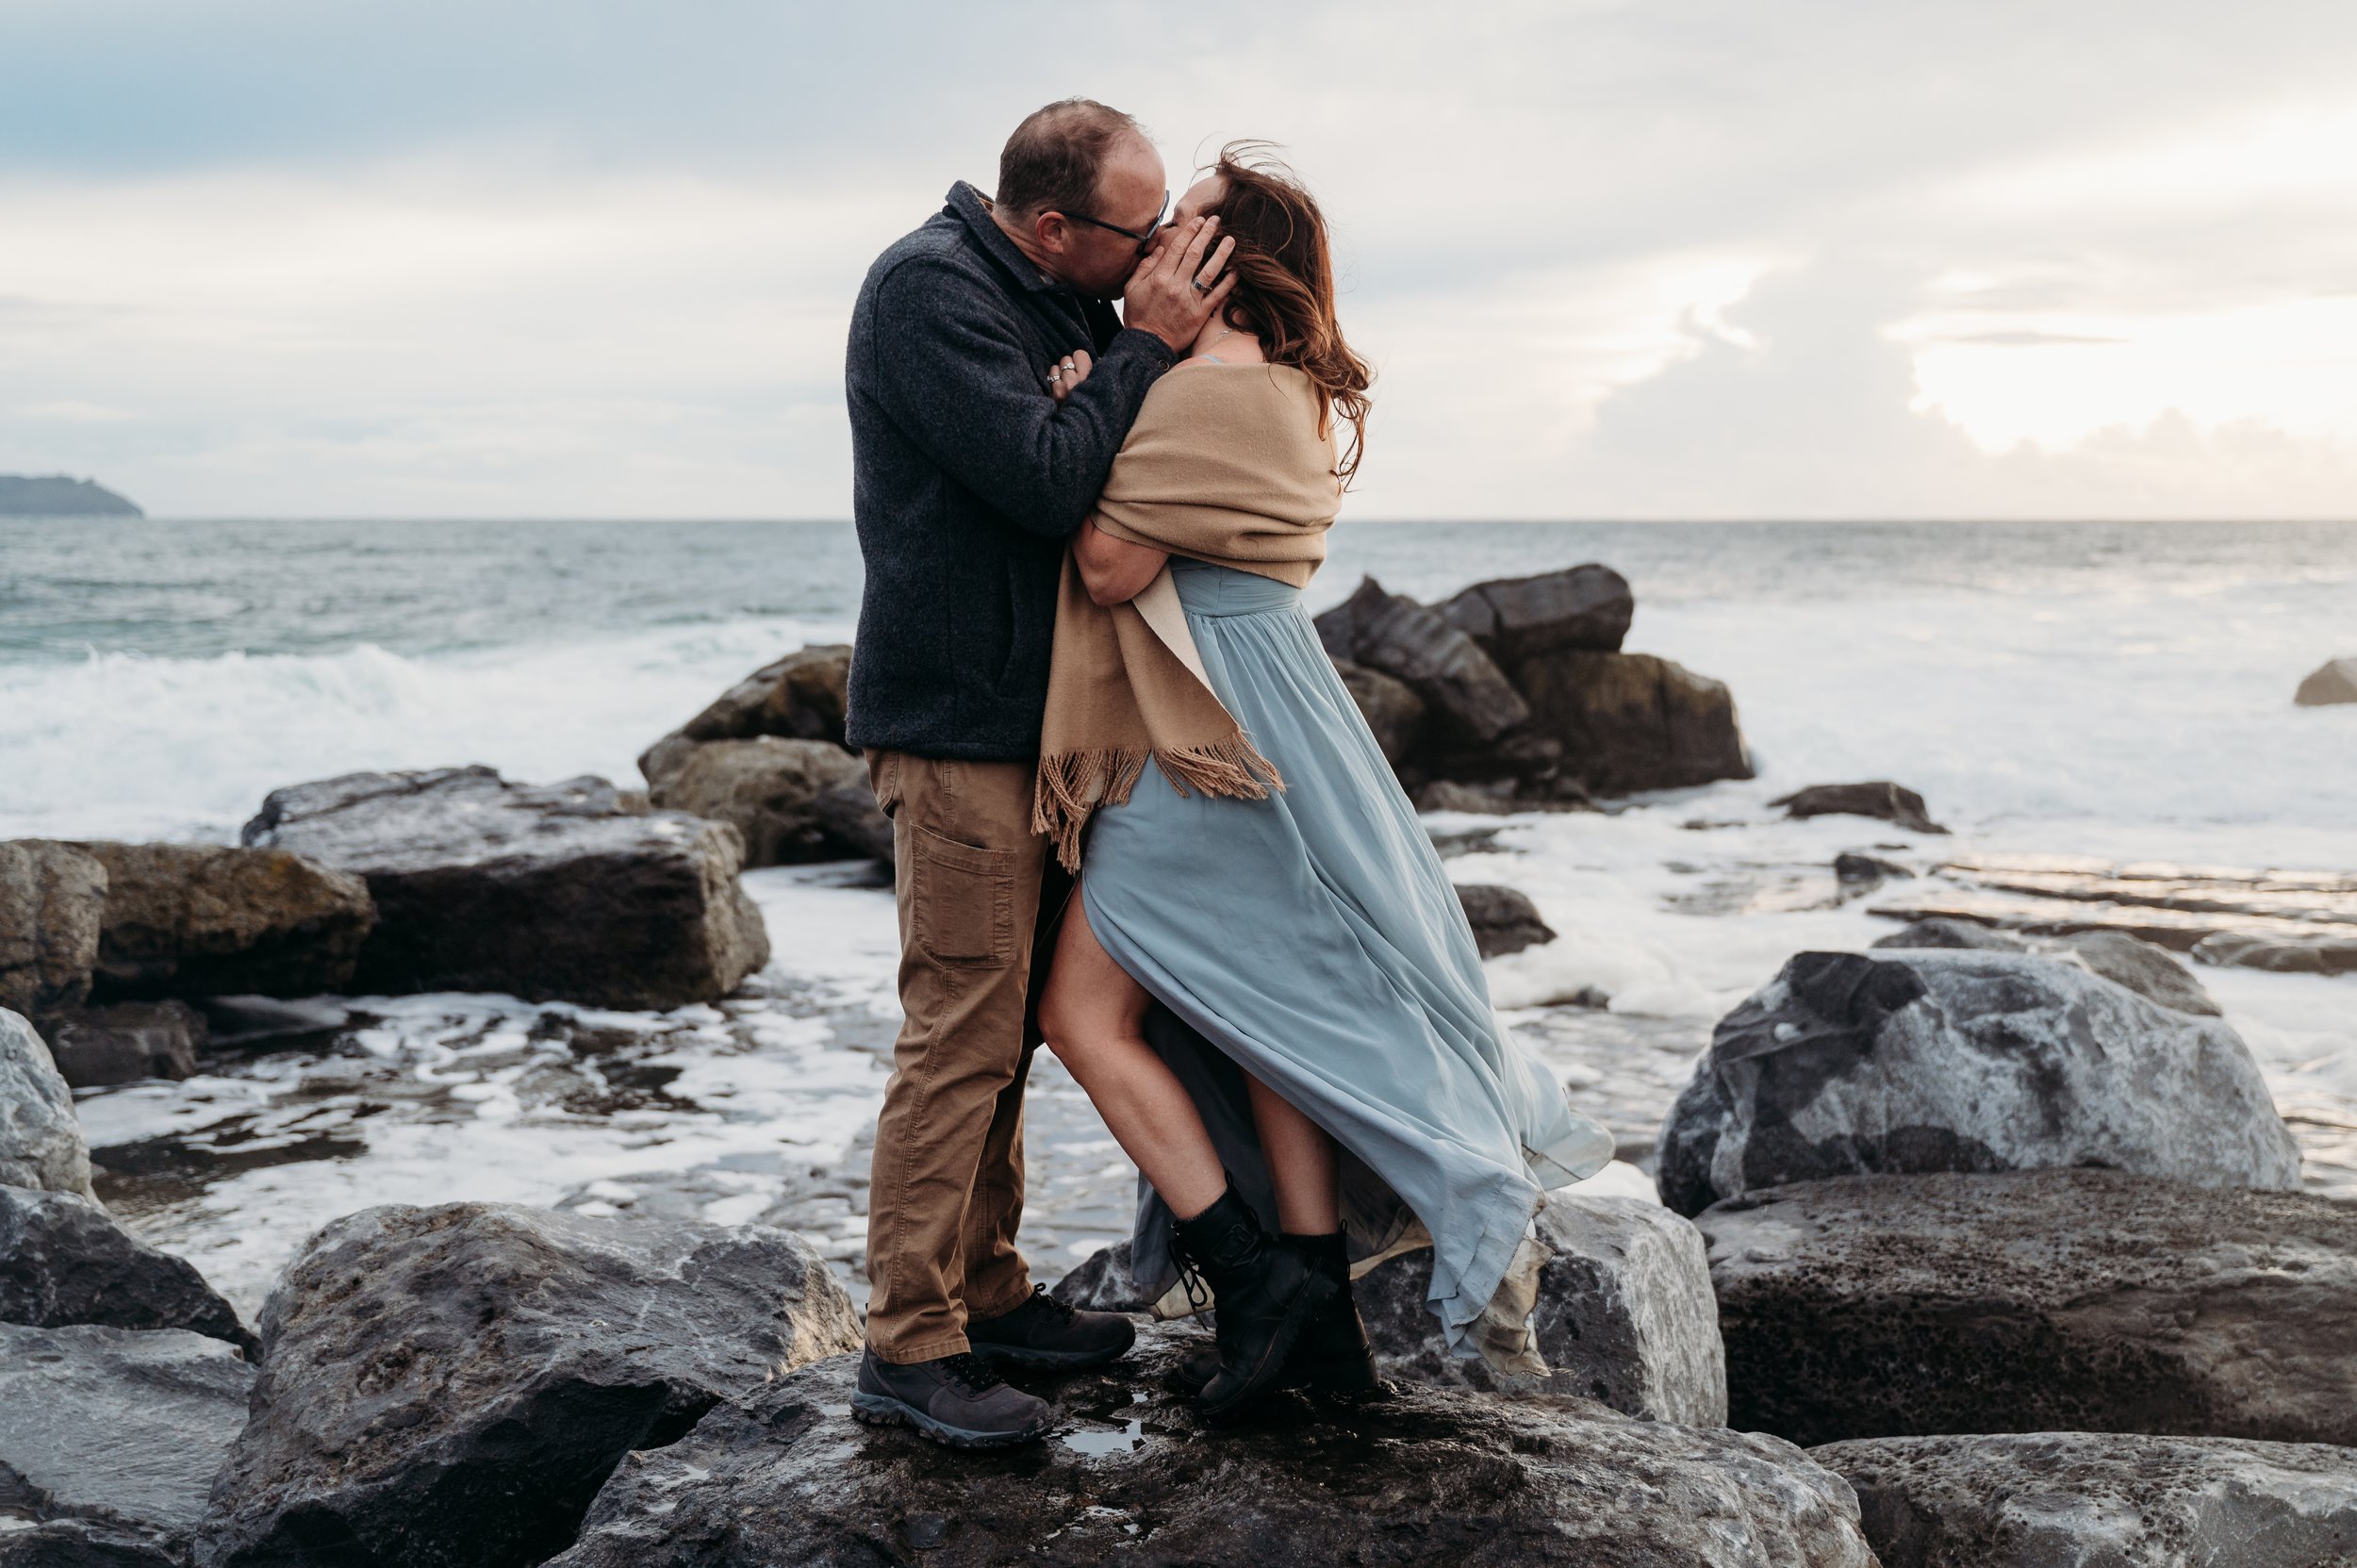 Marie O'Mahony photographer Doolin pier anniversary couples photo session kissing on rocks